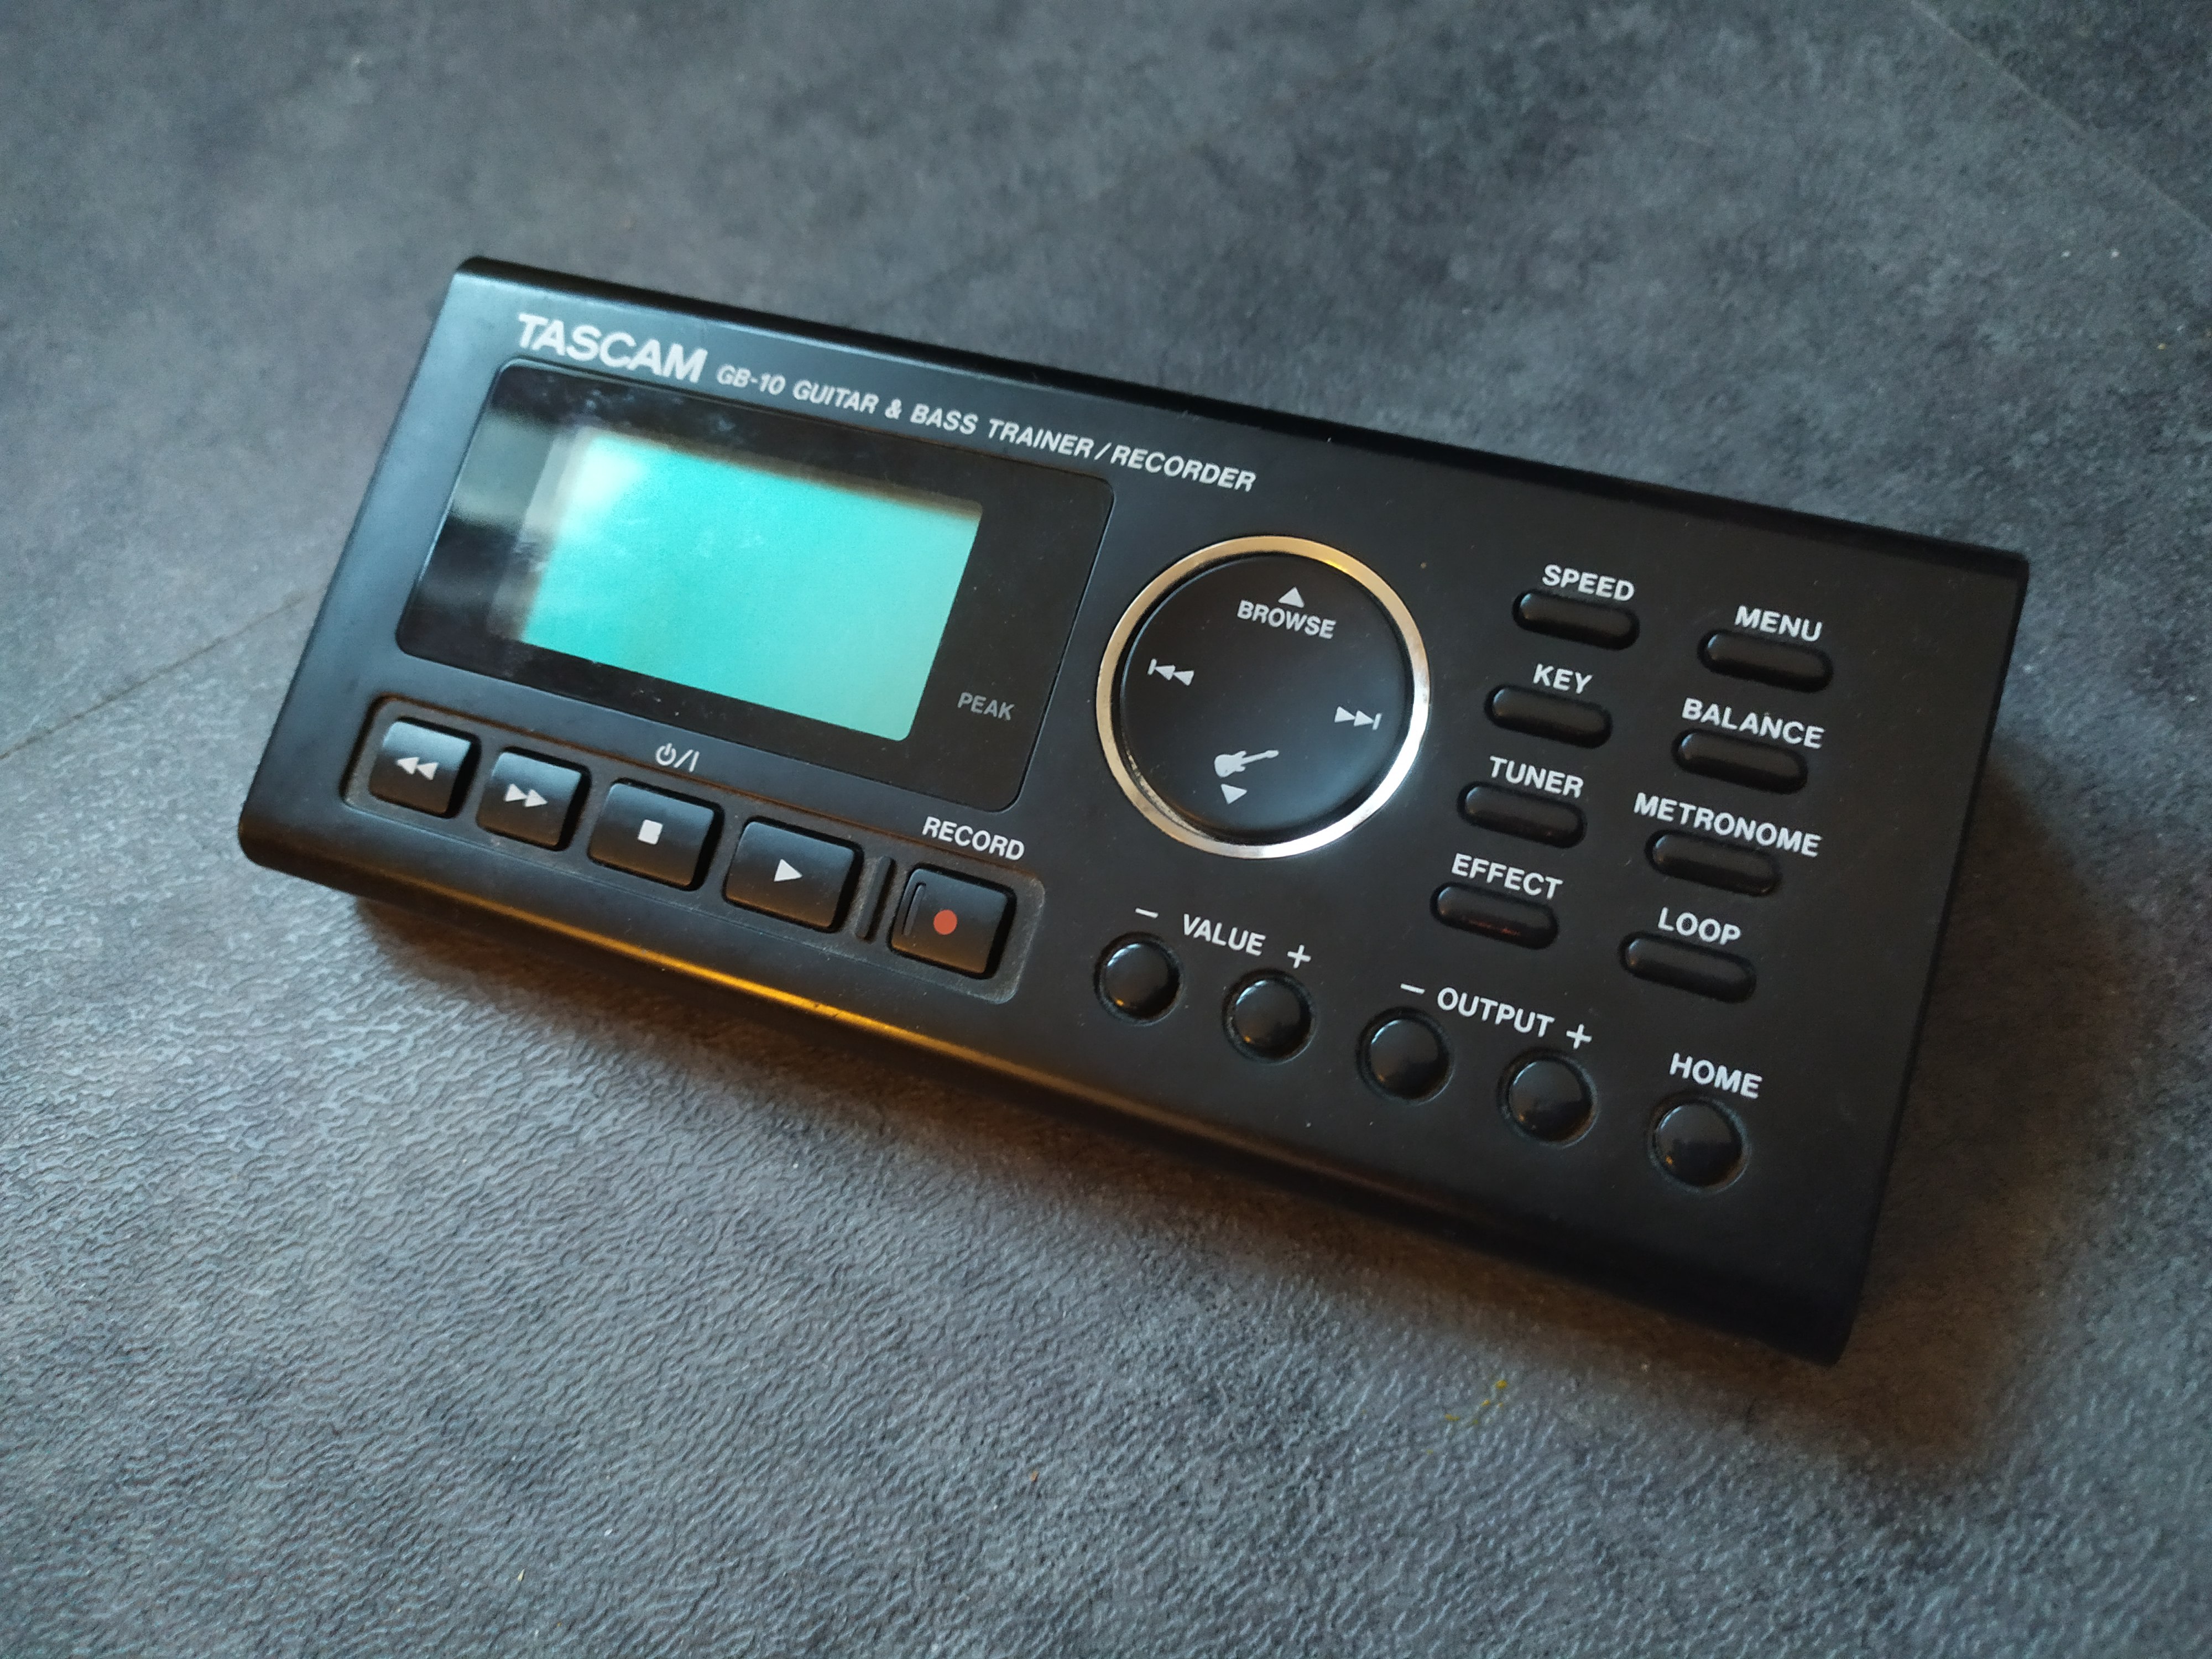 GB-10 Guitar/Bass Trainer/Recorder Tascam - Audiofanzine